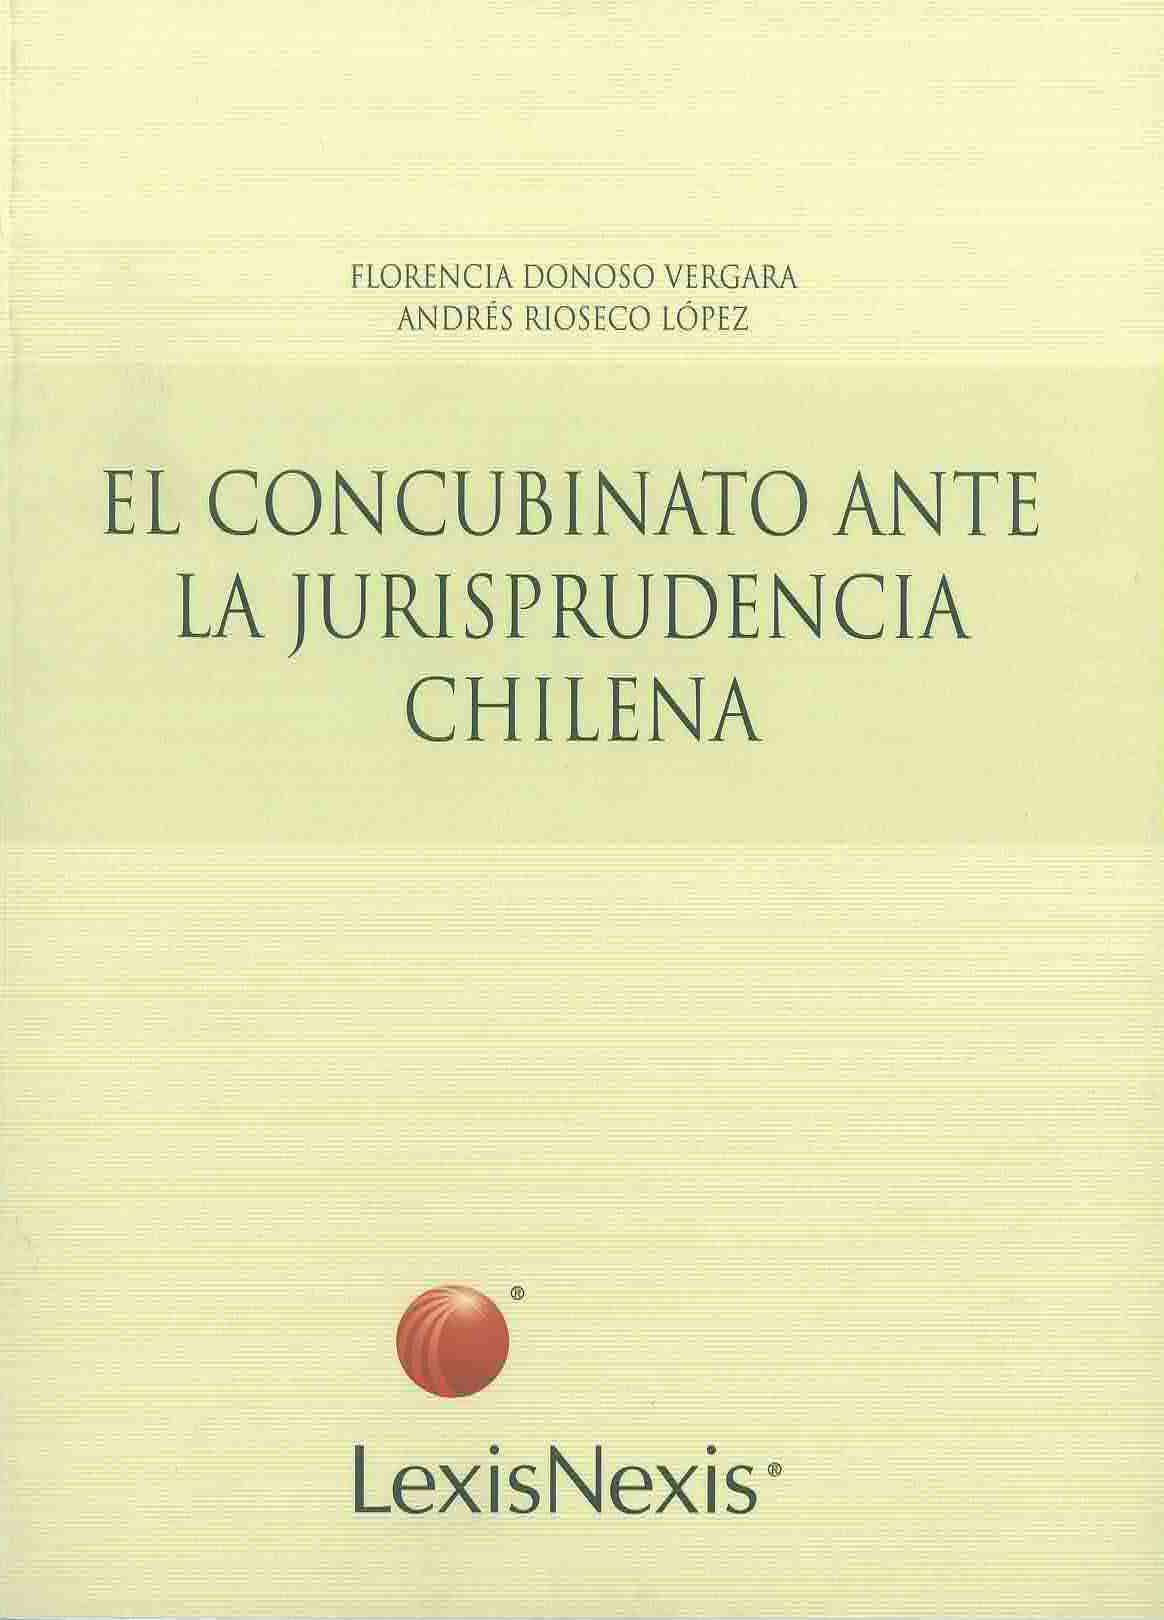 El concubinato ante la jurisprudencia chilena. 